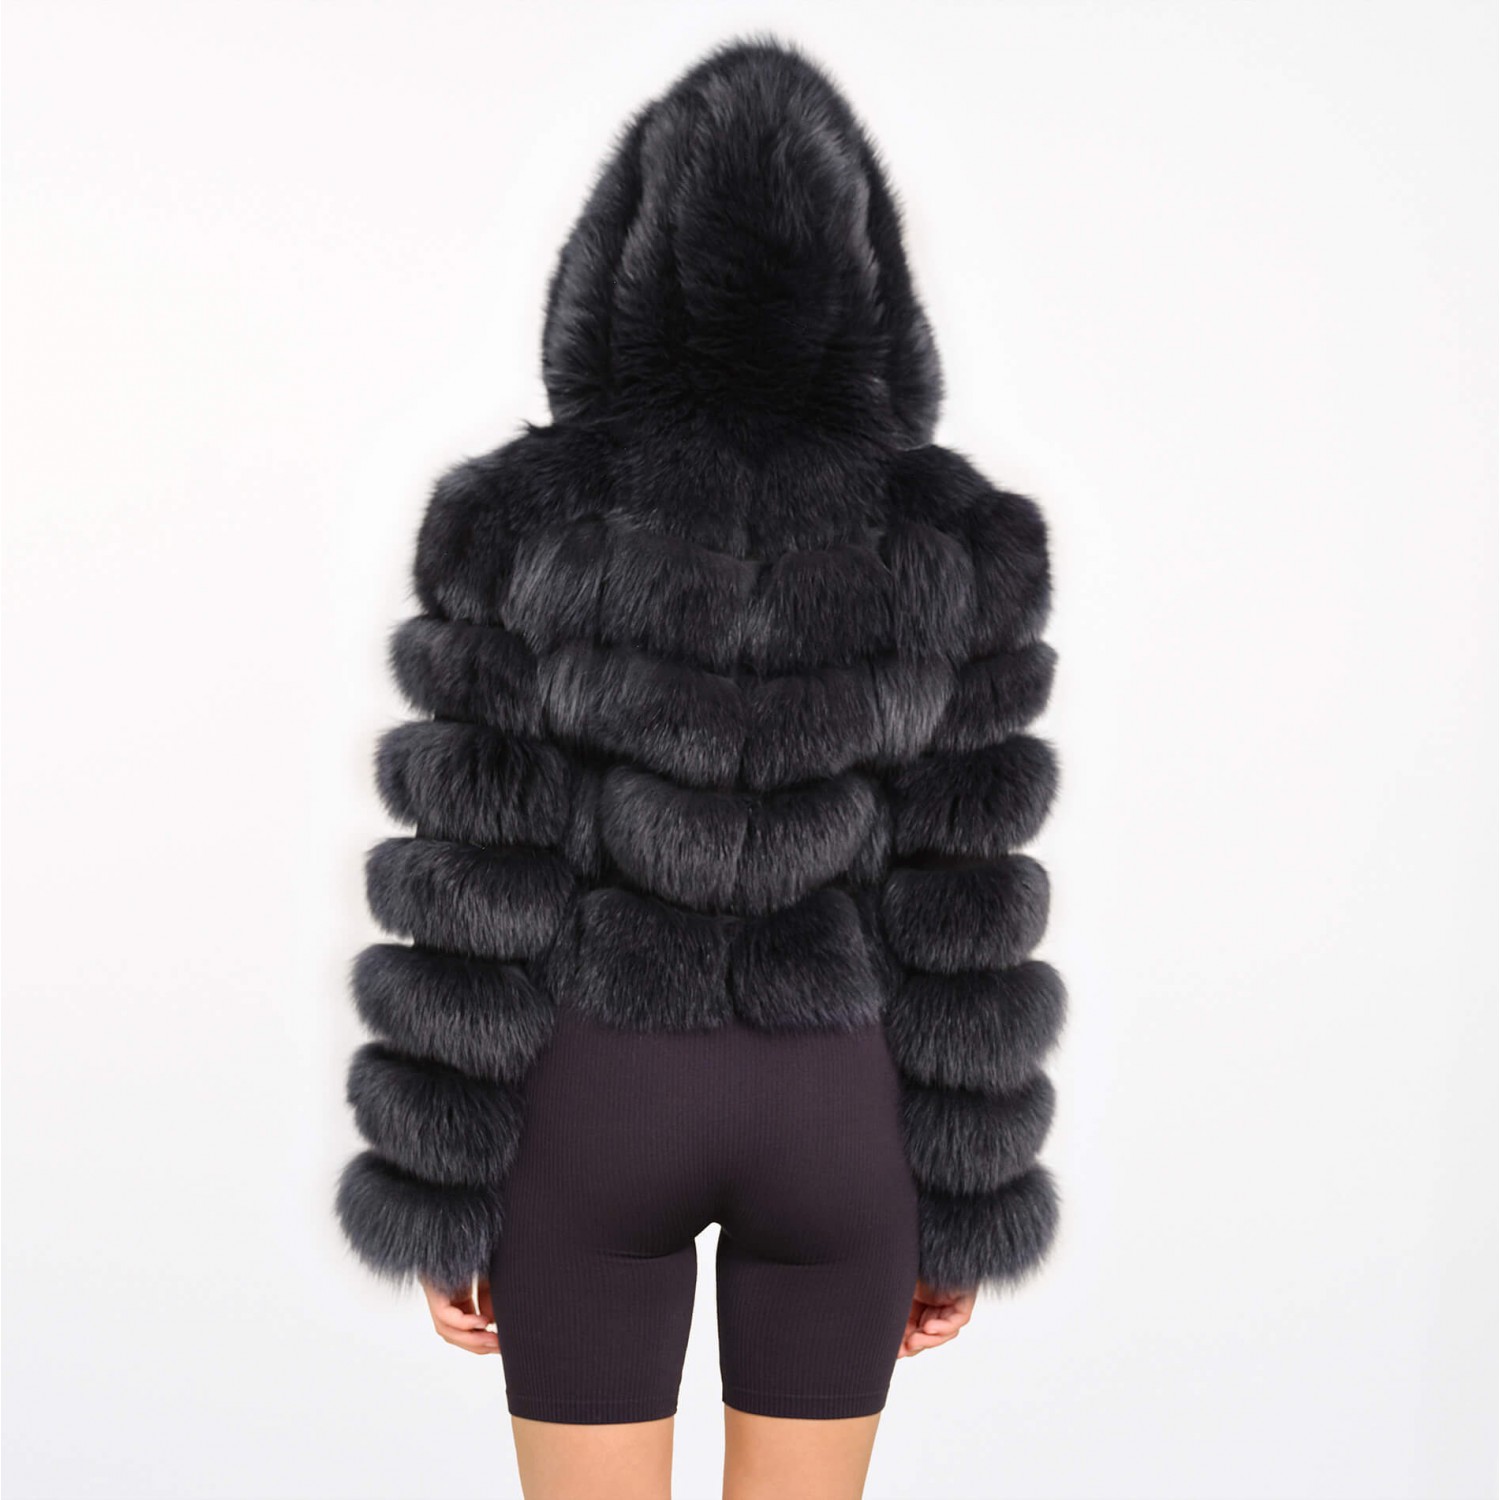 Cropped fur jacket